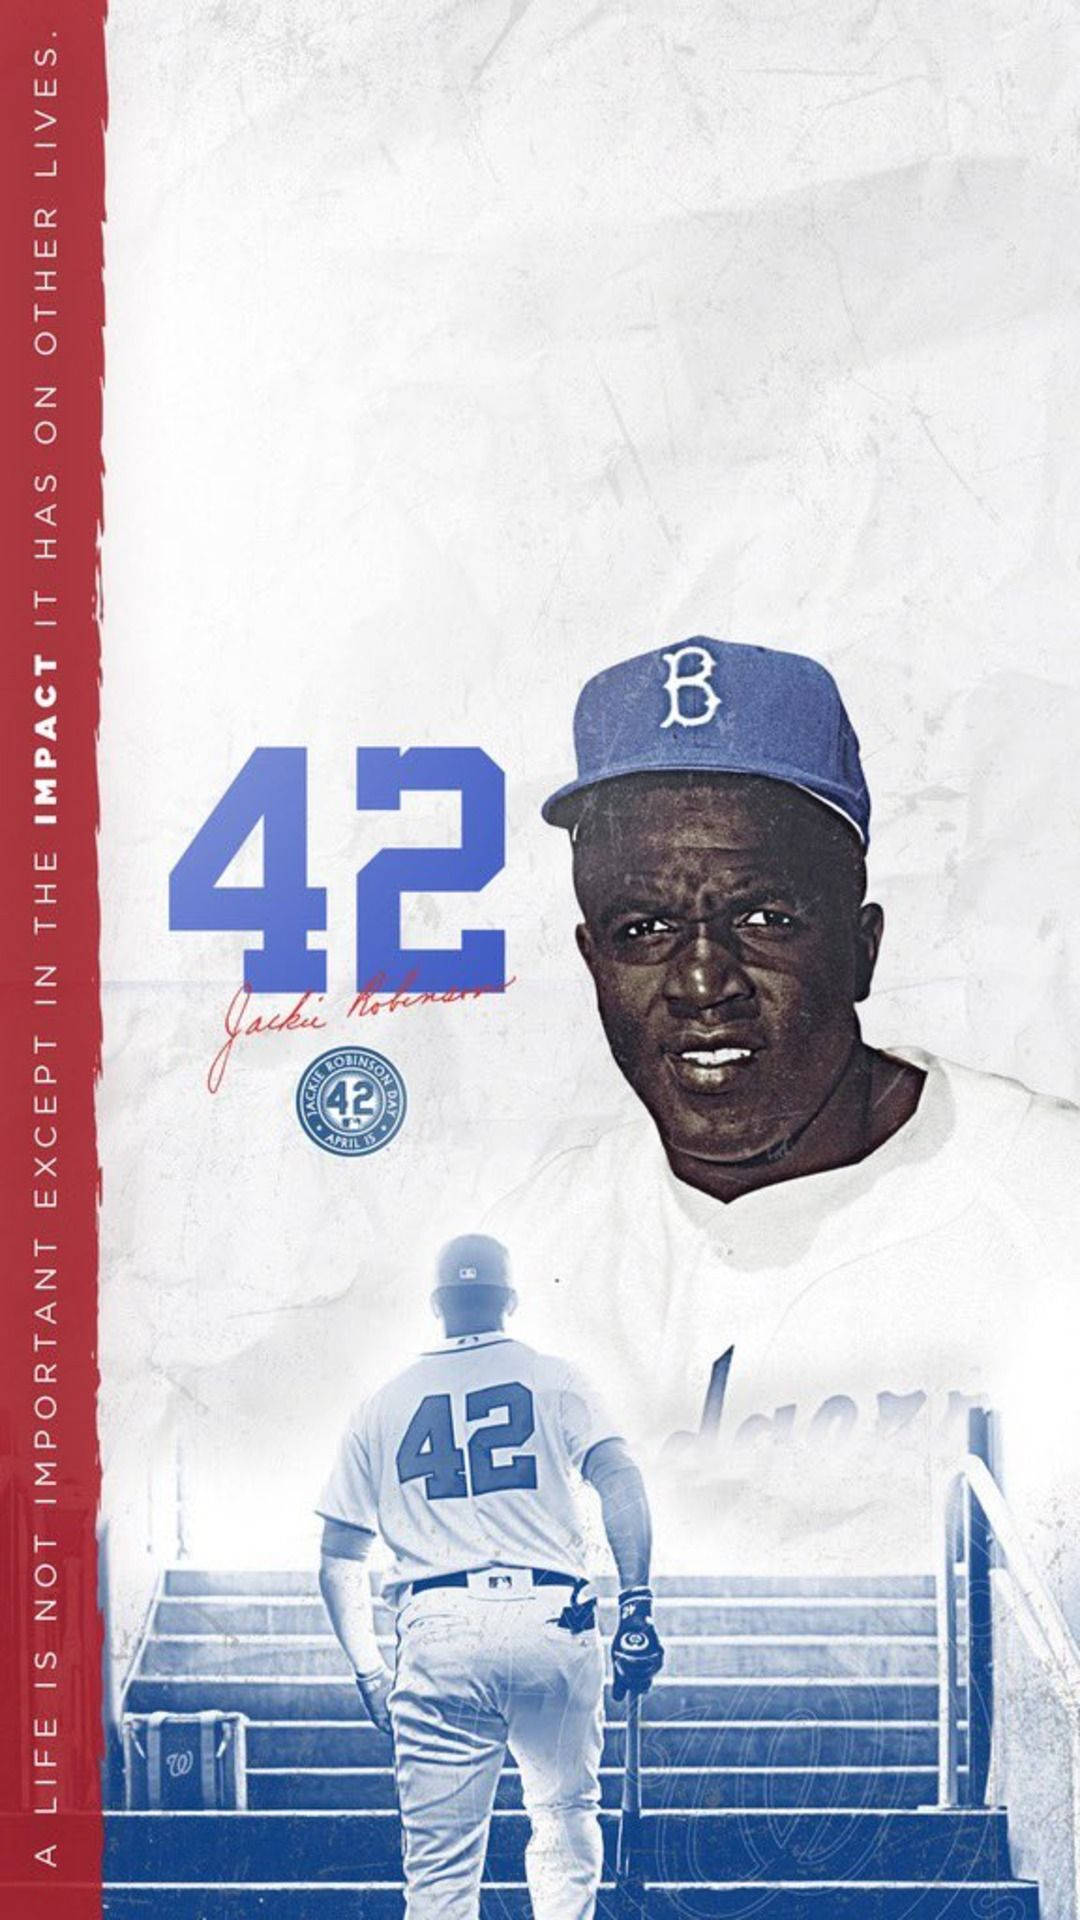 Download Jackie Robinson MLB Player Wallpaper